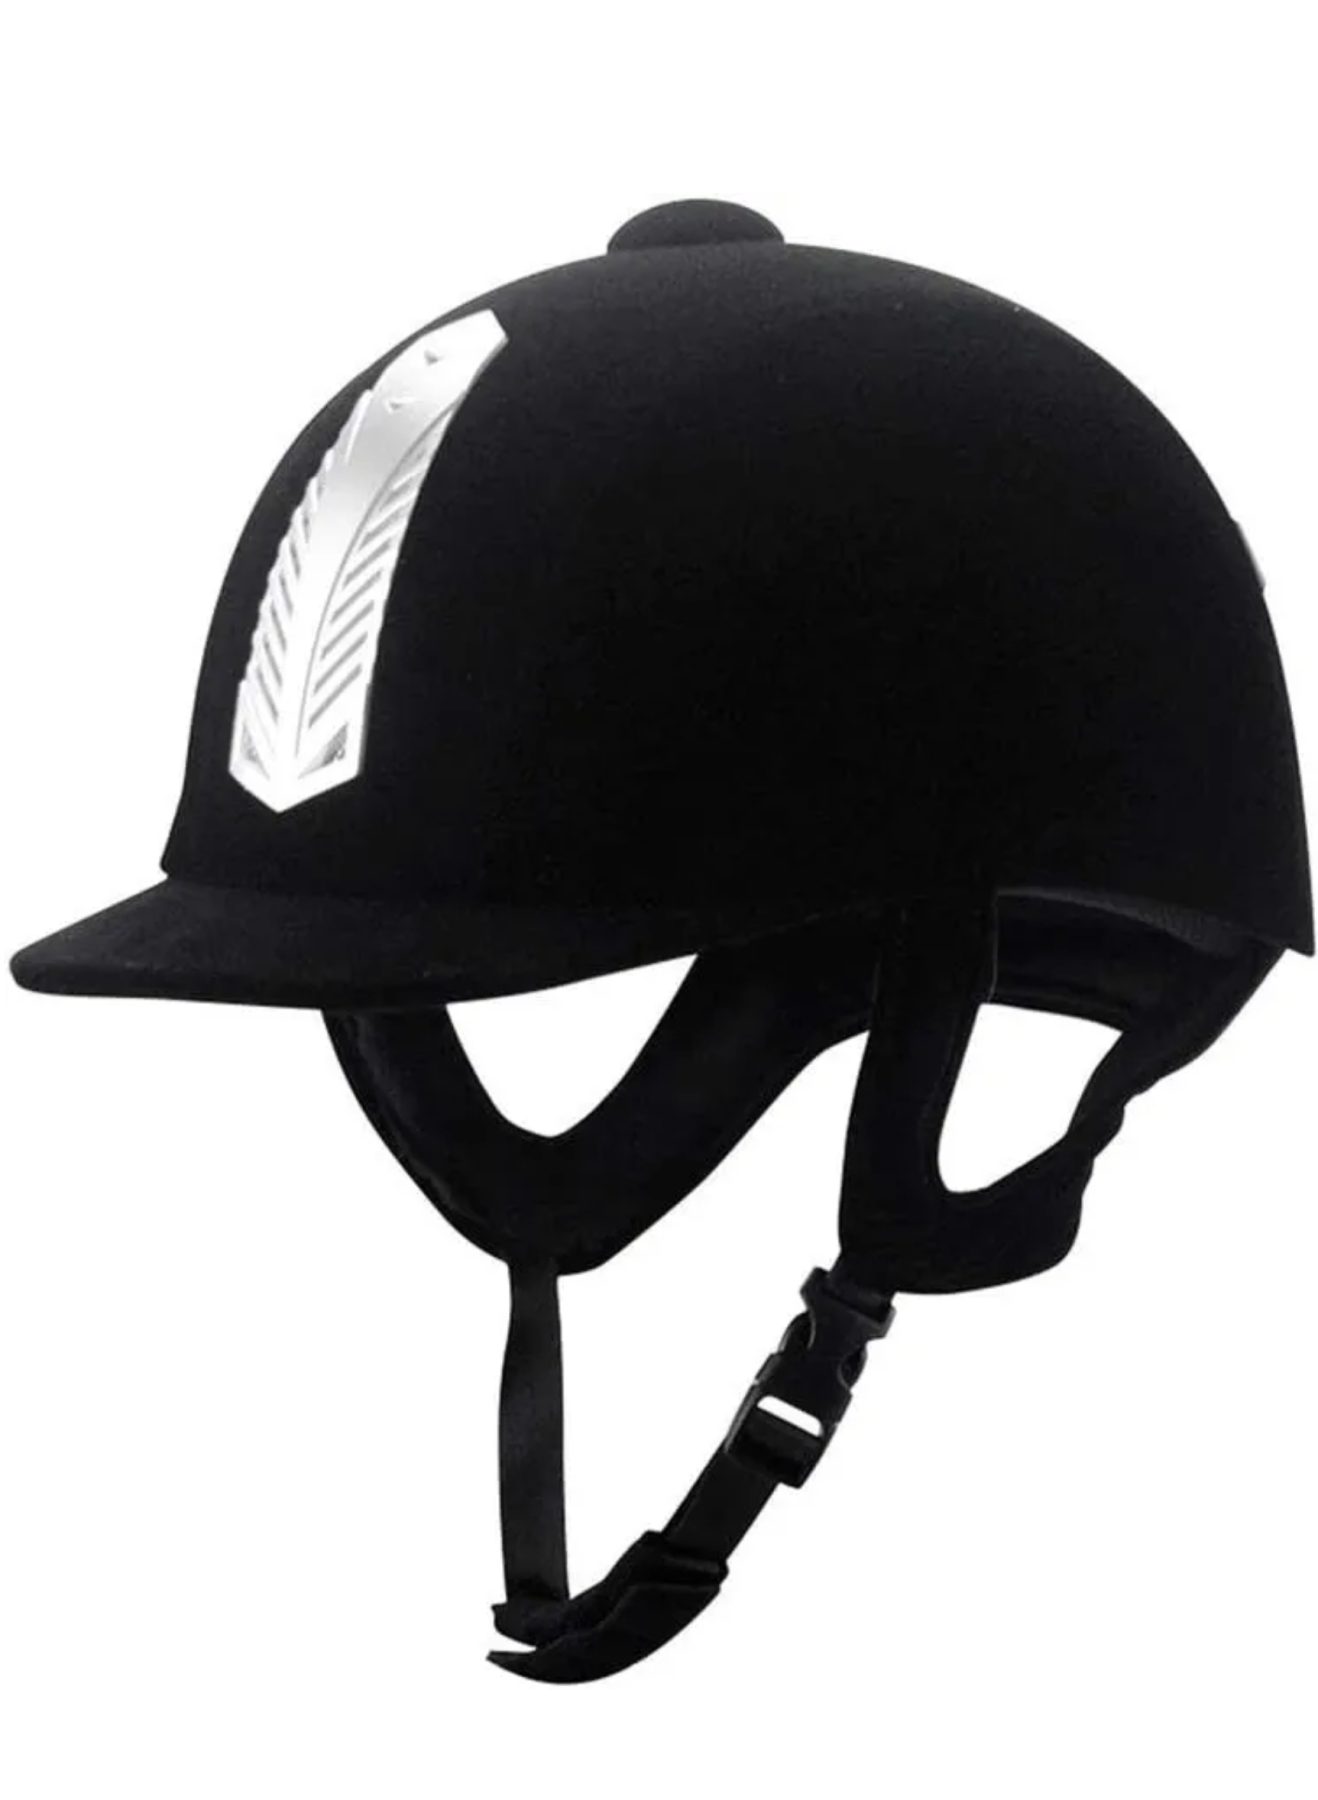 O'SHOW Adjustable Black Velvet Equestrian Horse Riding Helmet, Size 58: RRP £58.99